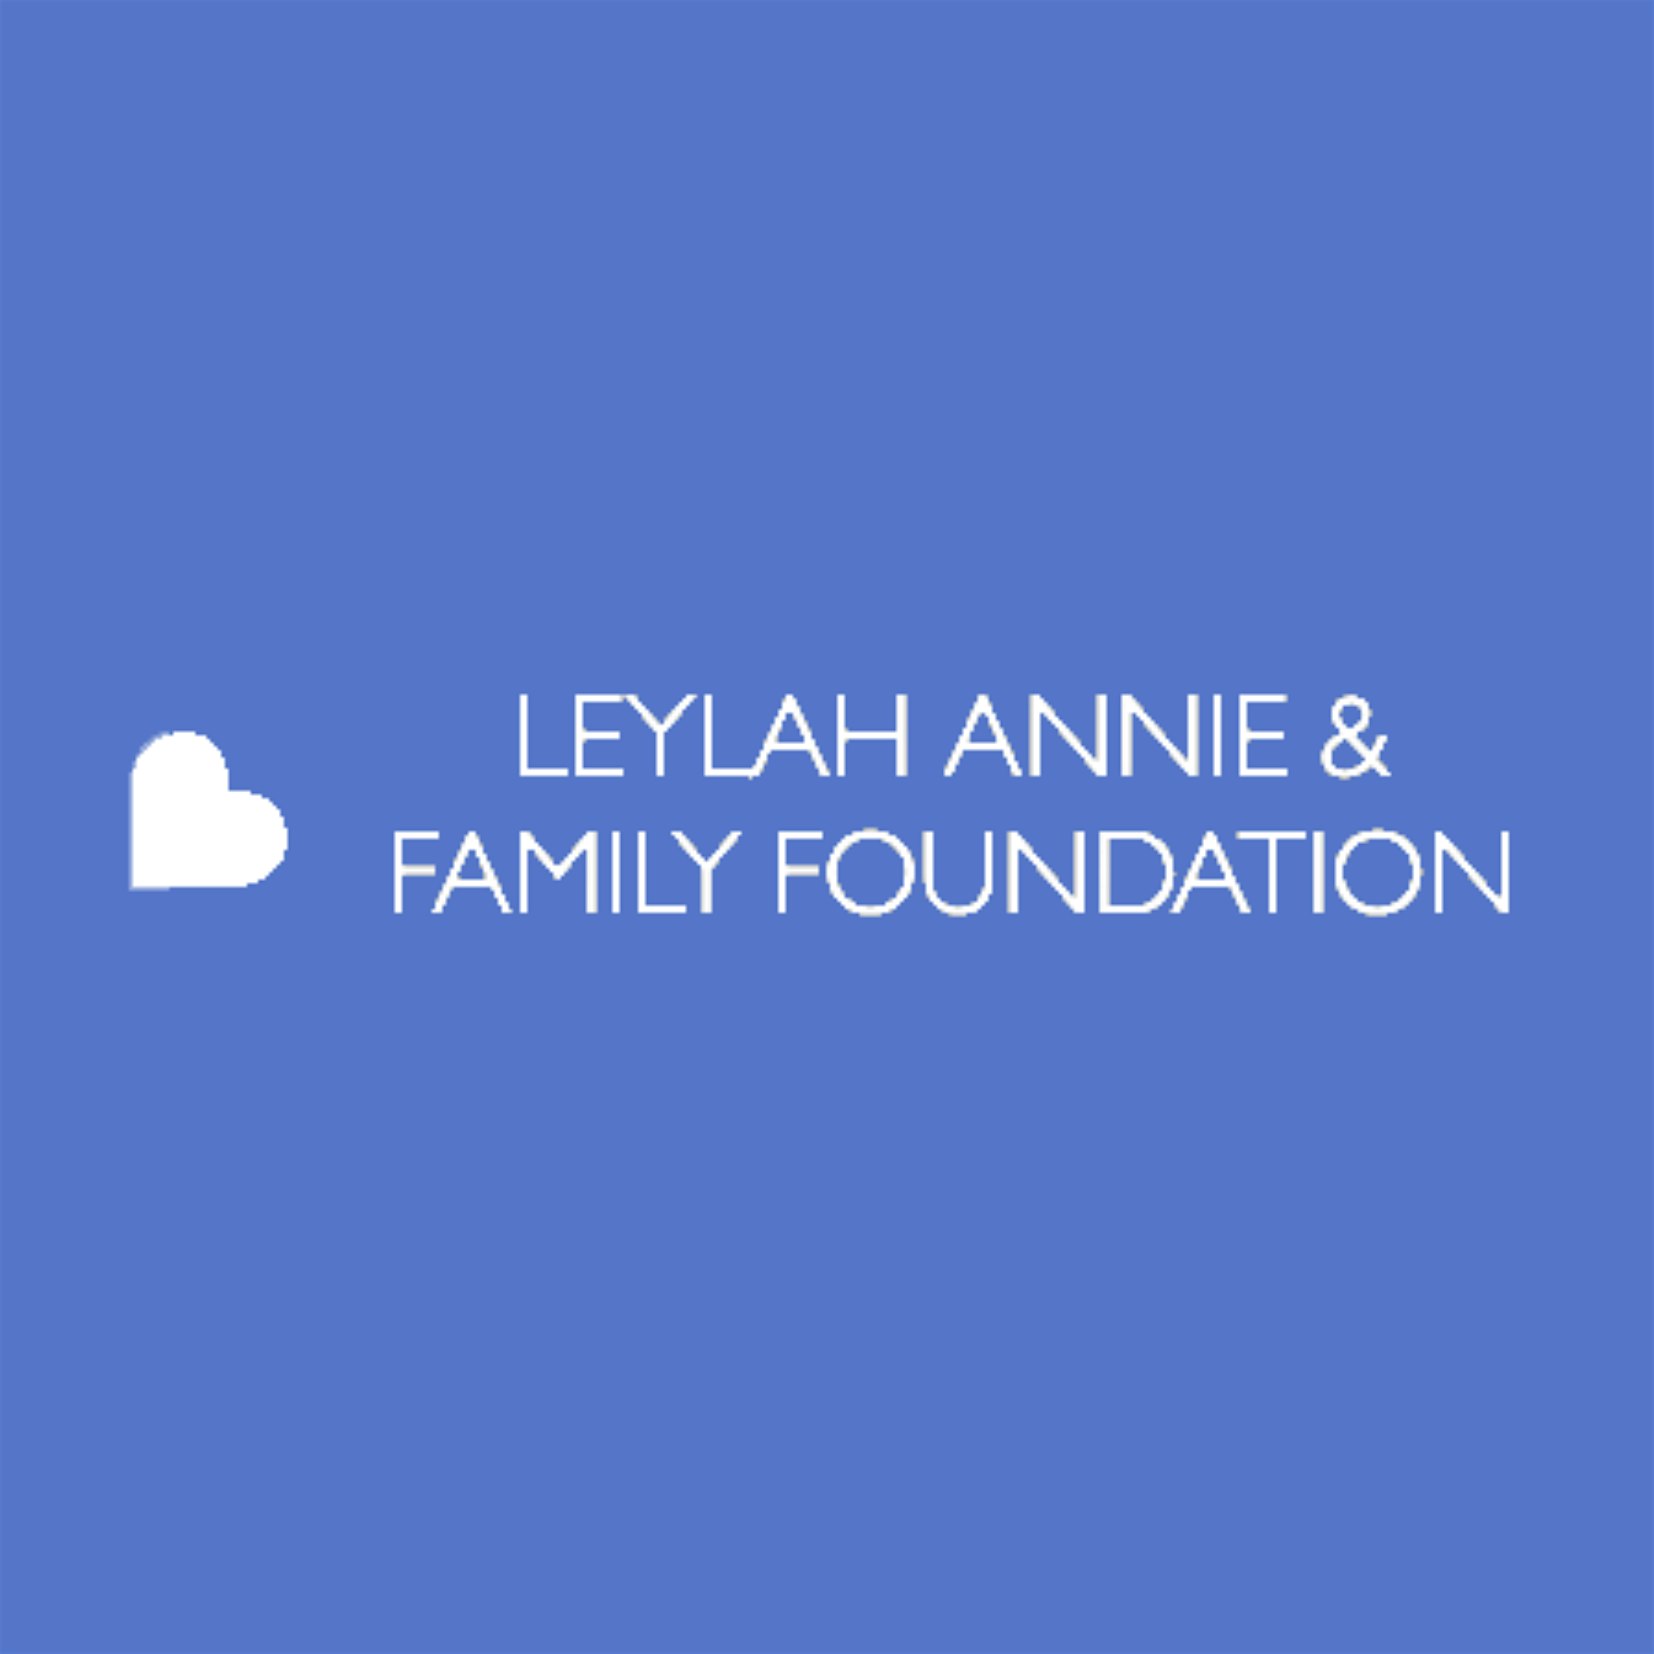 Leylah Annie & Family Foundation